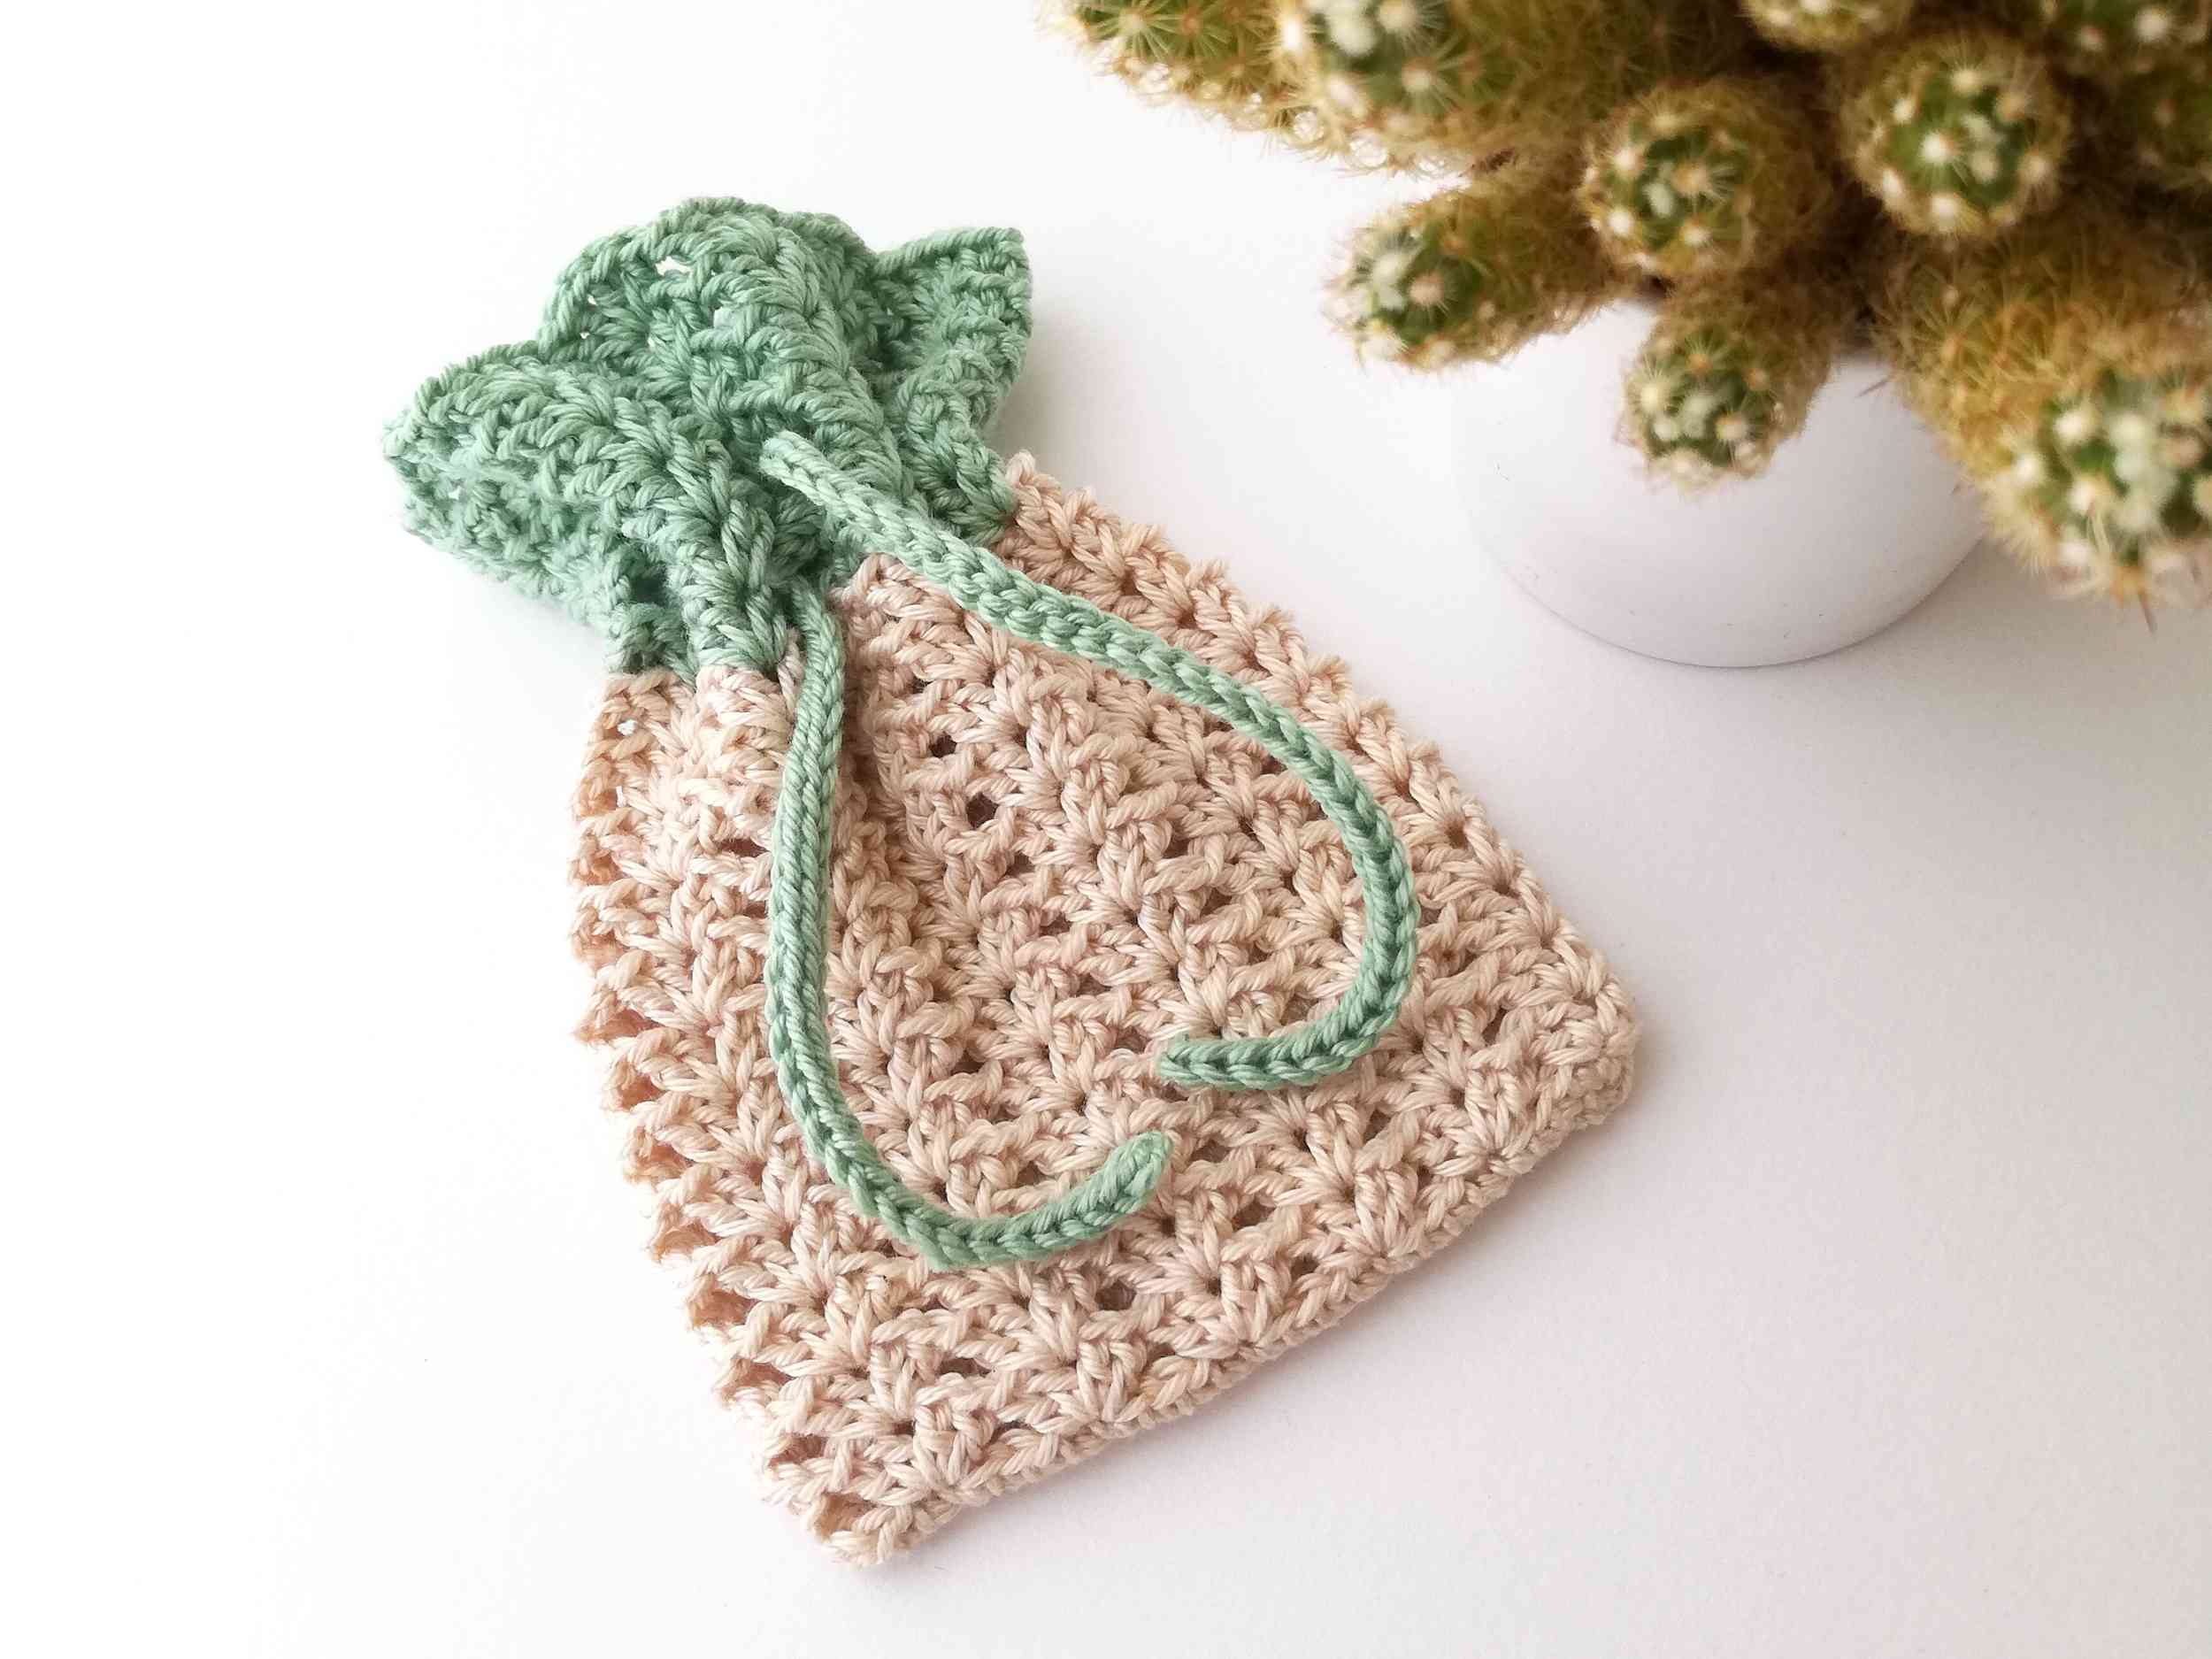 Crochet Drawstring Bag